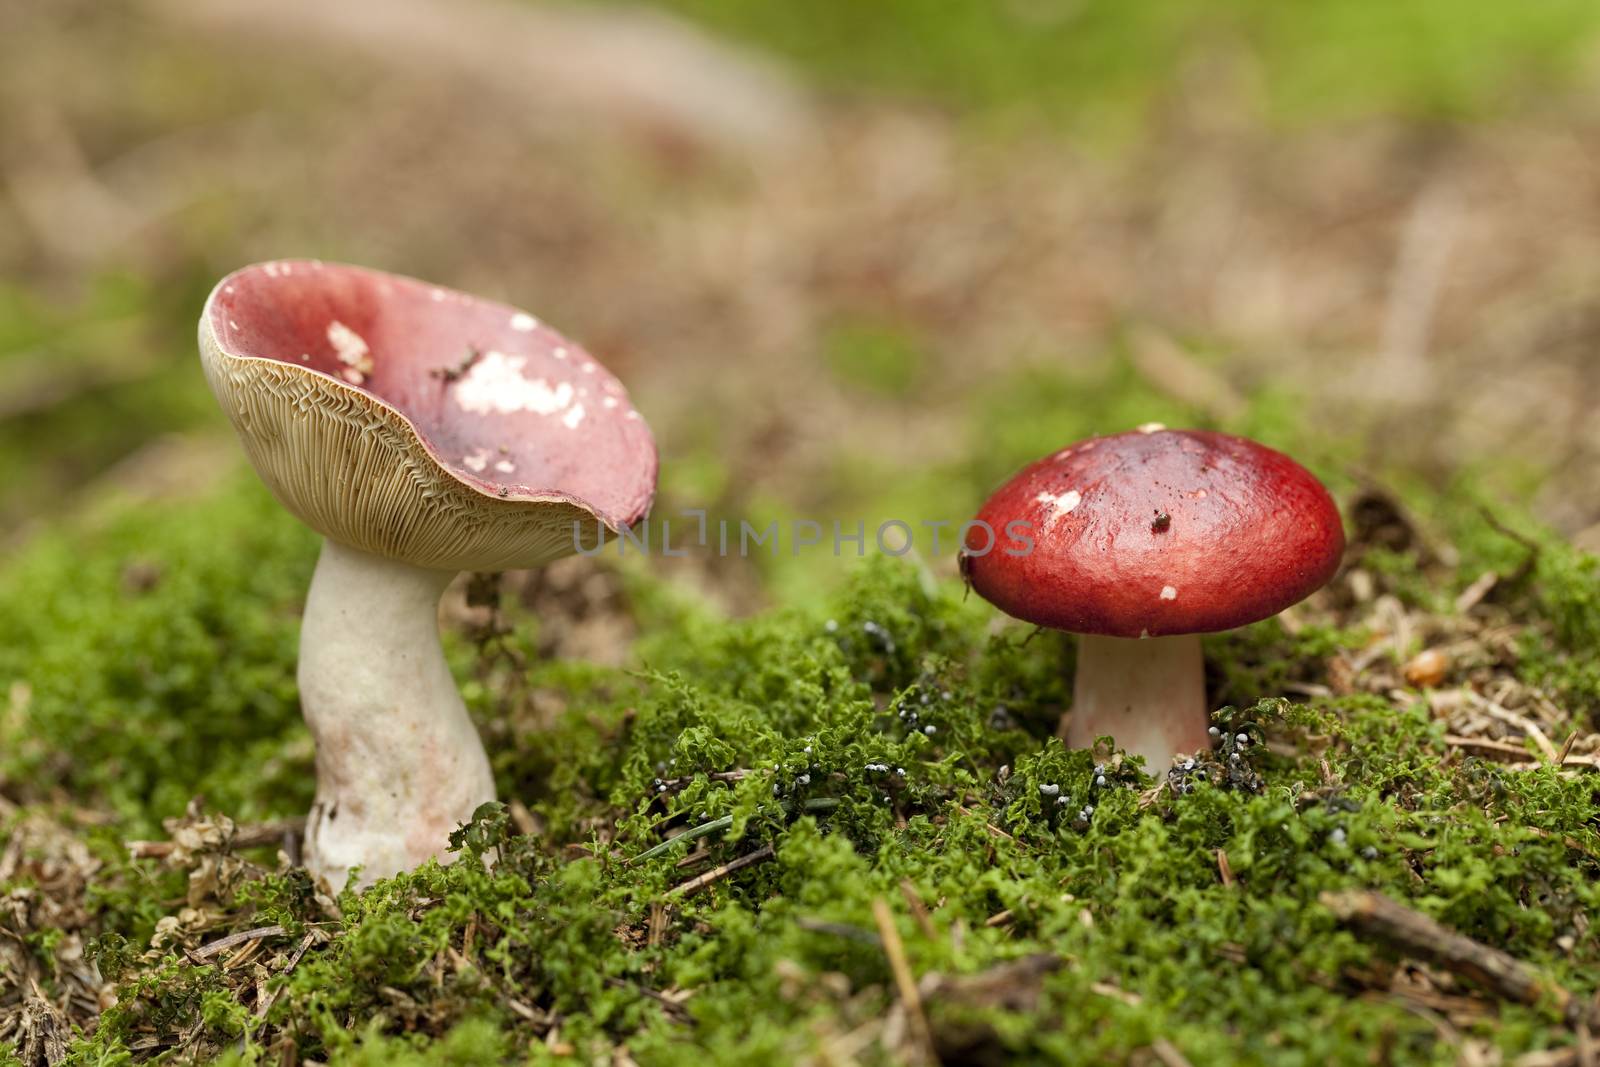 Russula mushroom by dabjola